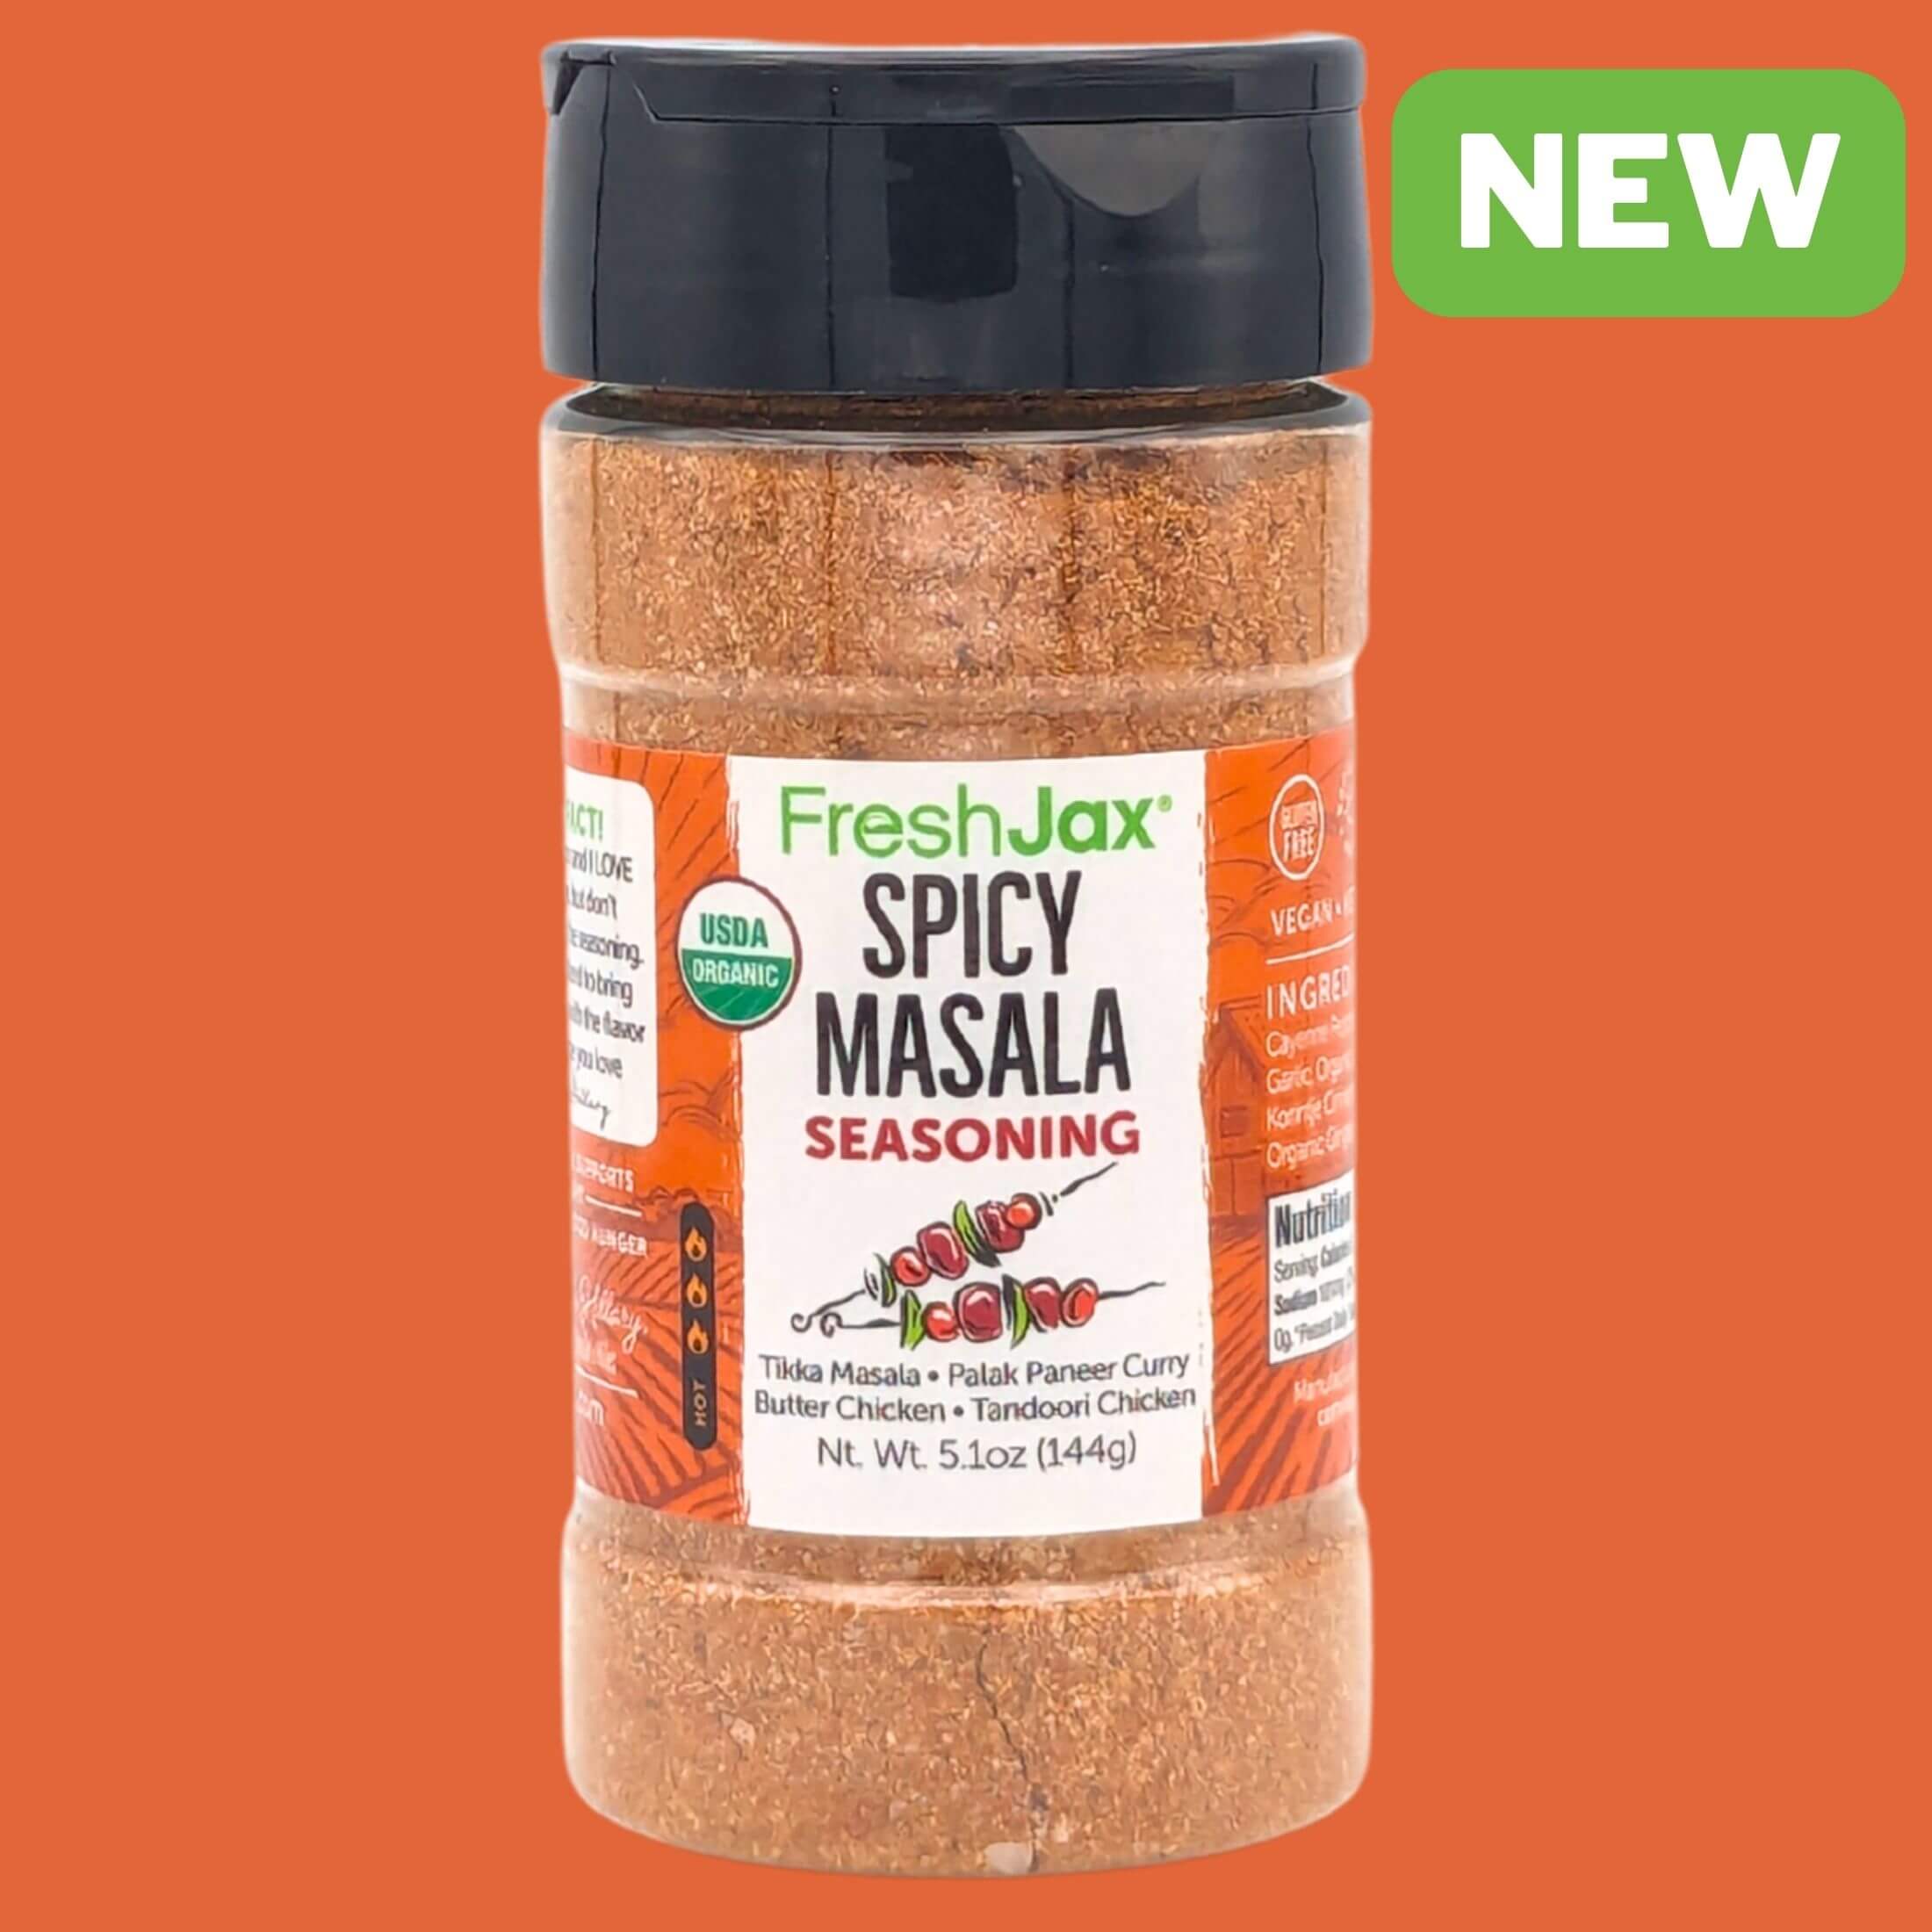 FreshJax Organic Spicy Masala Seasoning - Large Bottle